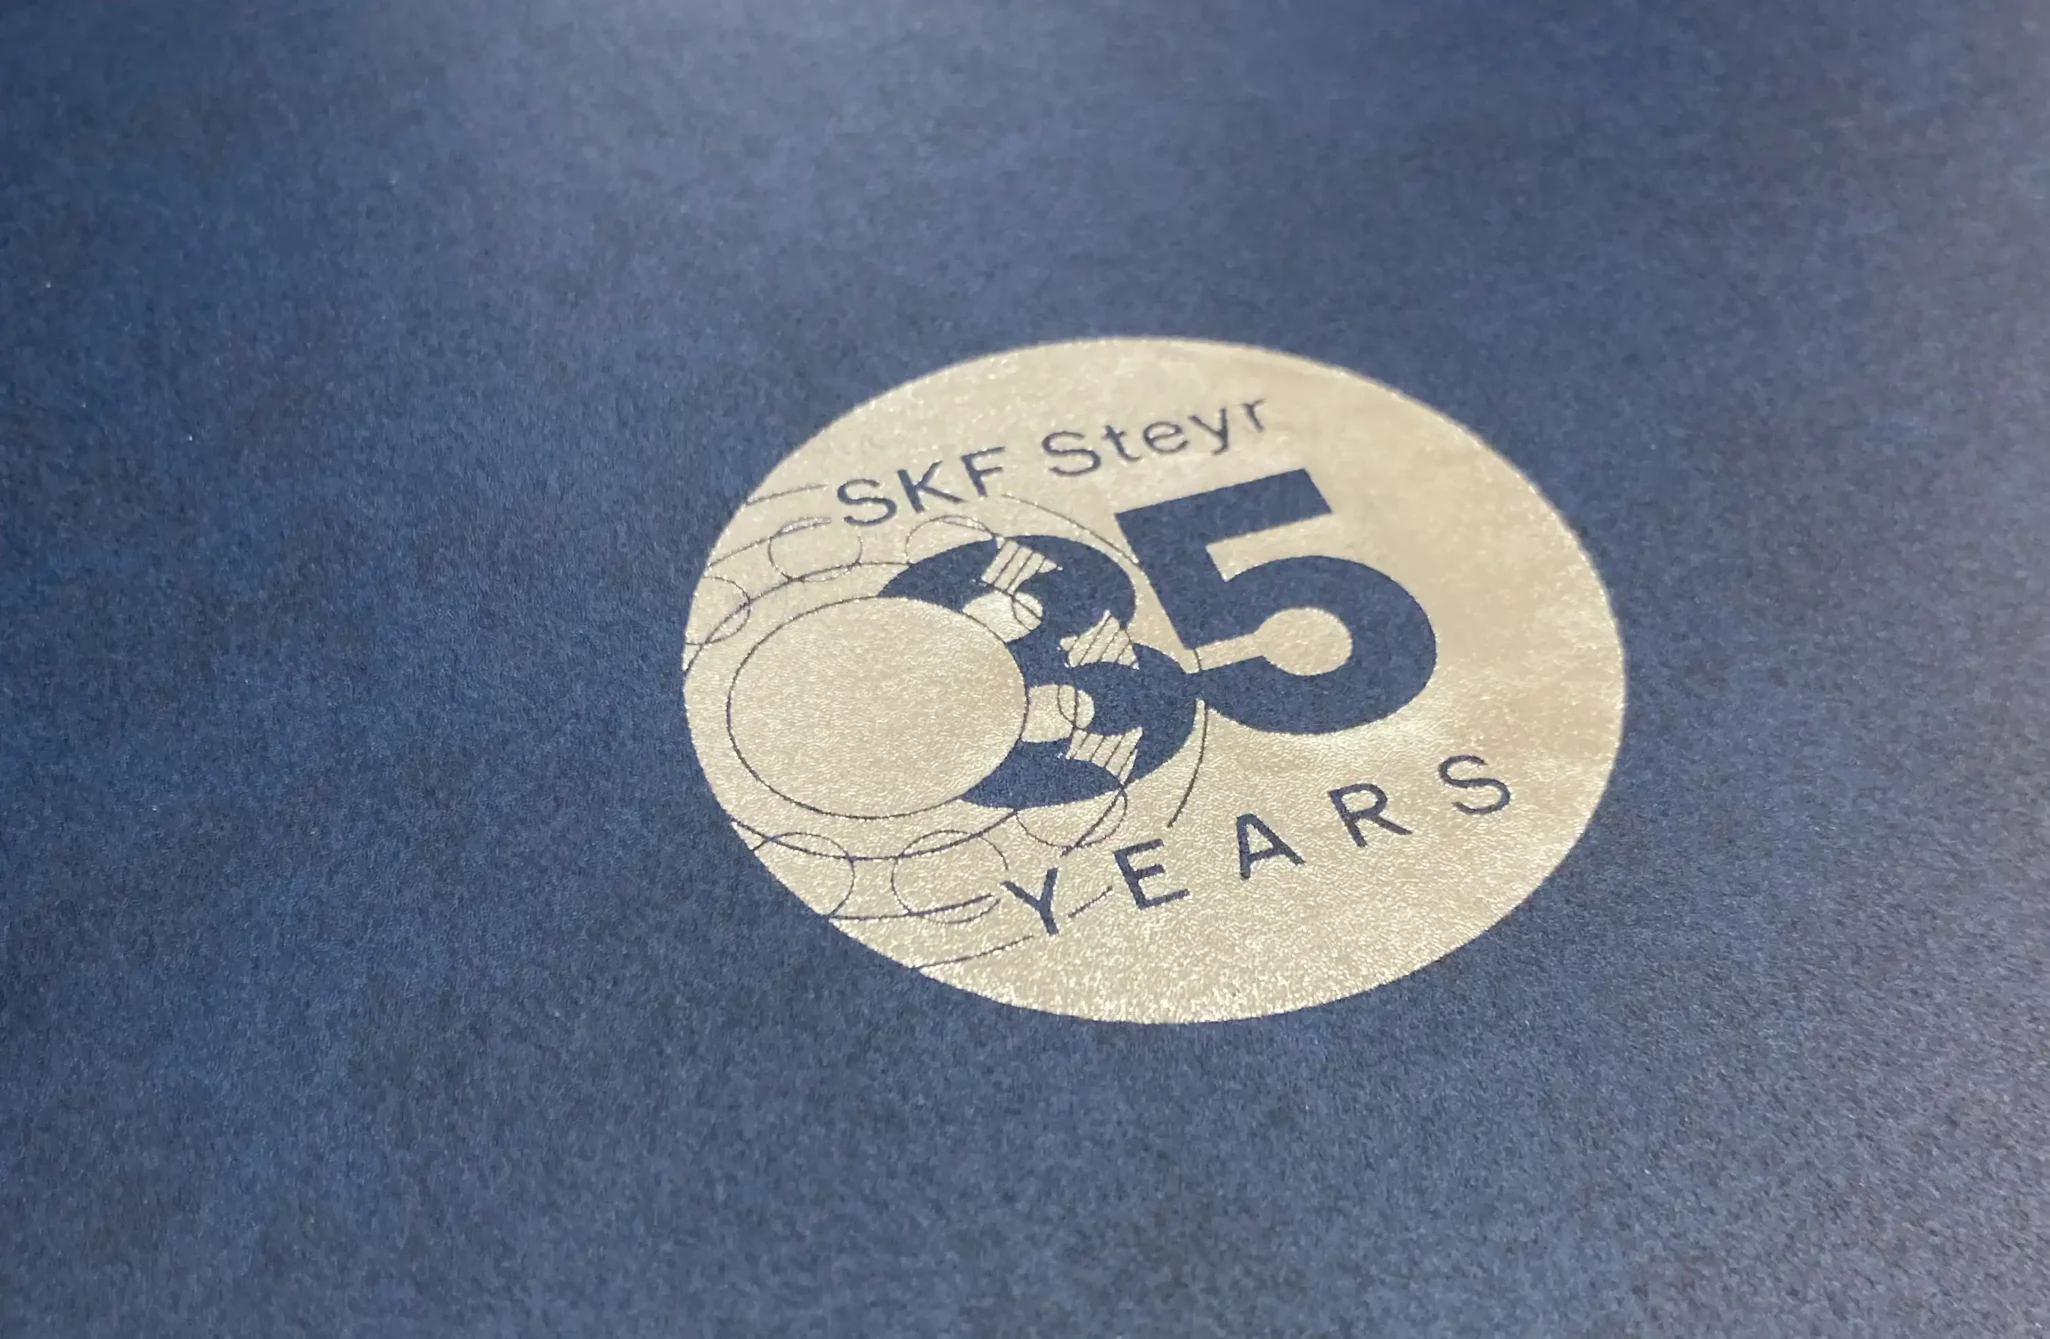 SKF 35 YEARS